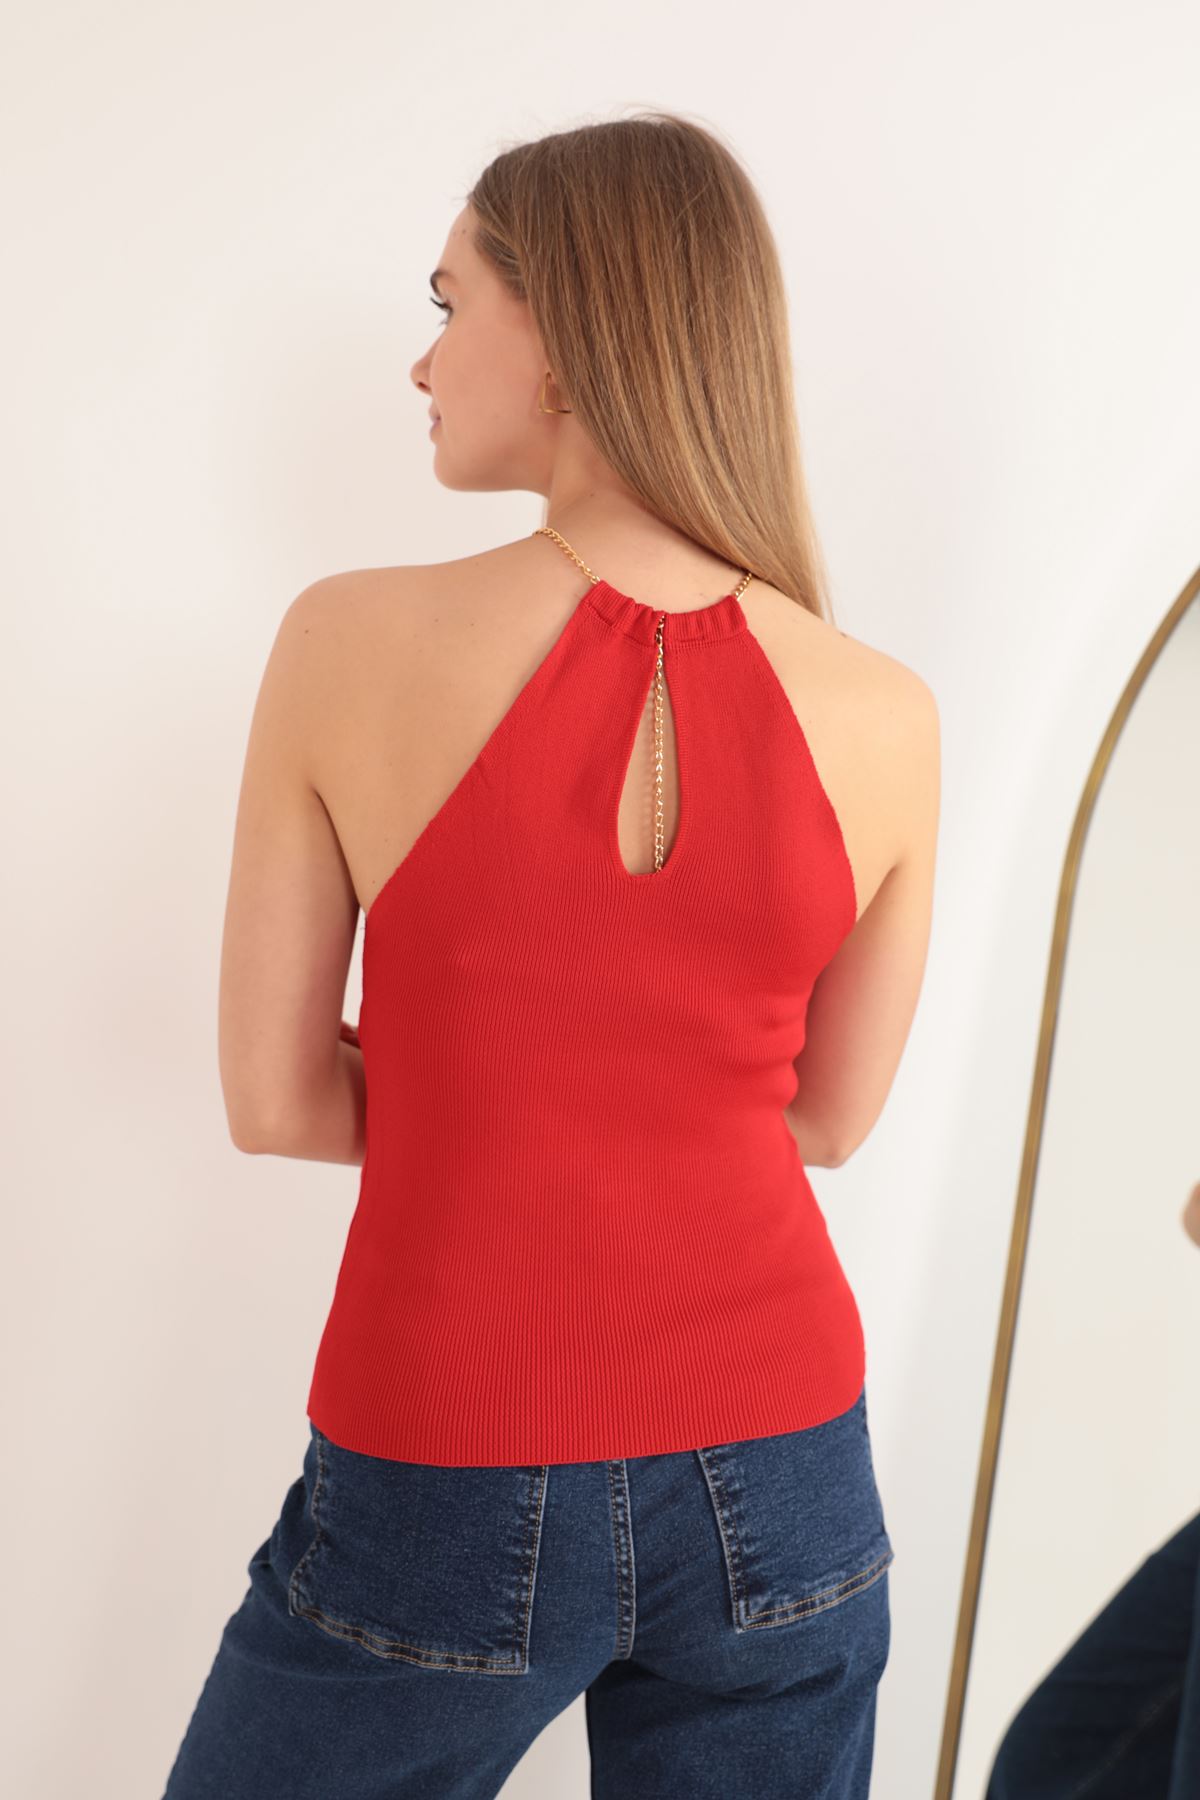 Triko Kumaş Zincir Detay Kadın Bluz-Kırmızı